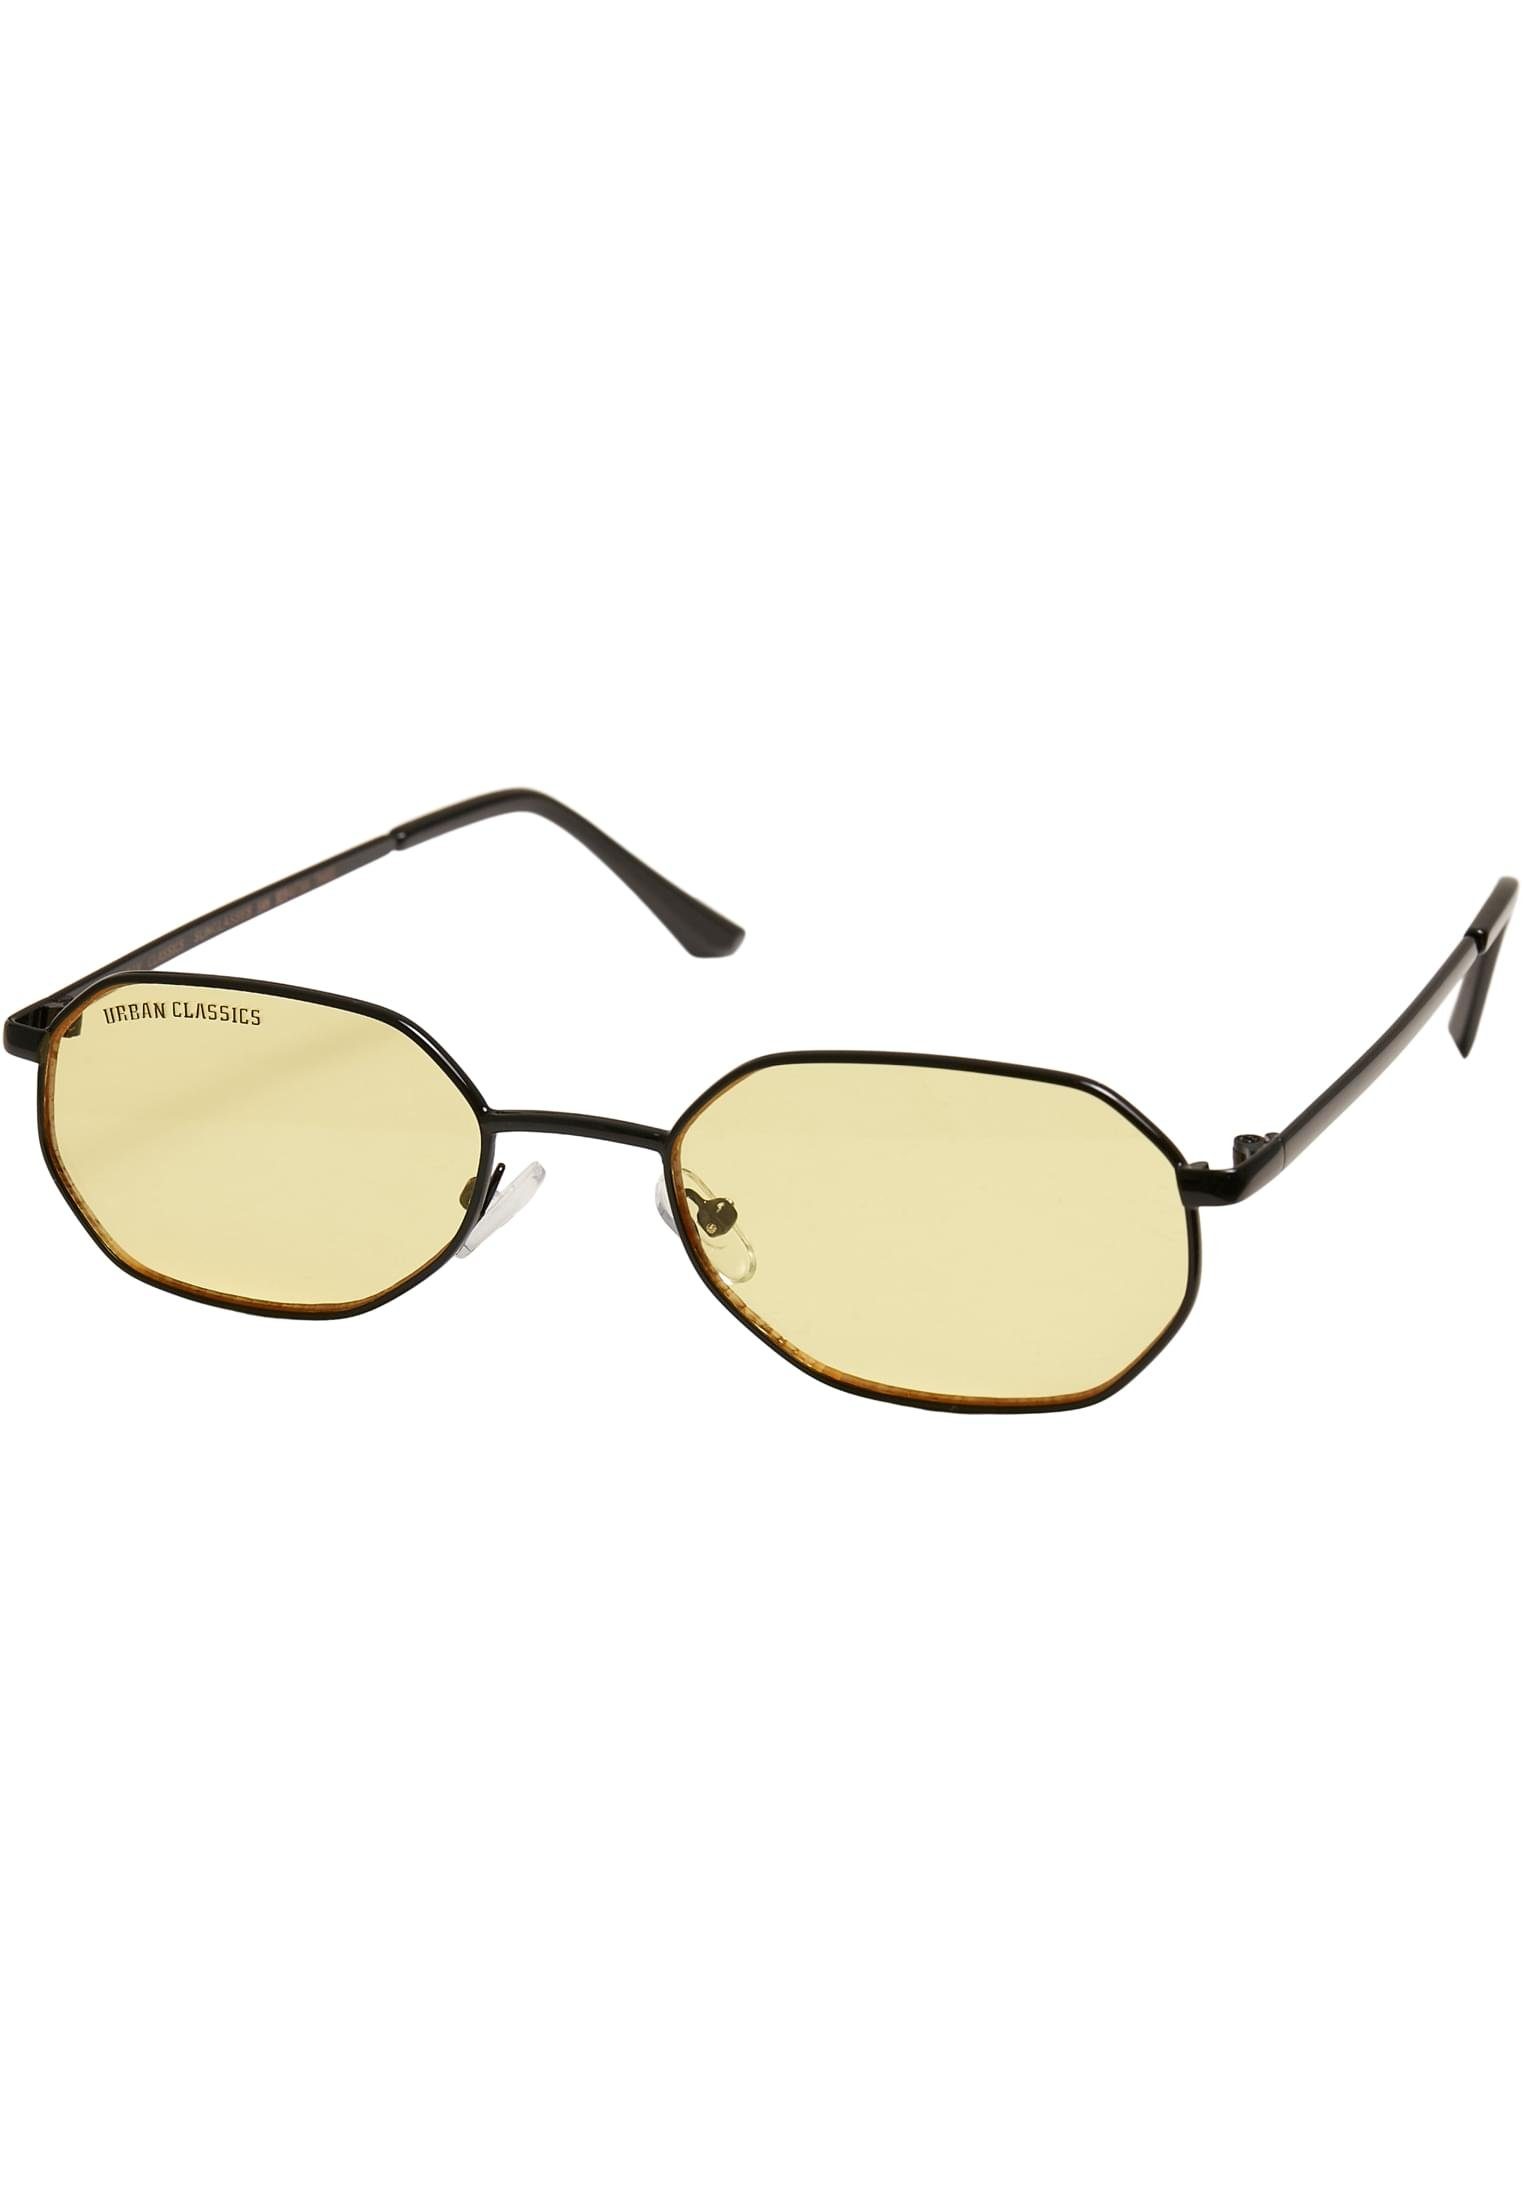 URBAN CLASSICS Sonnenbrille Sunglasses San Unisex Sebastian 2-Pack